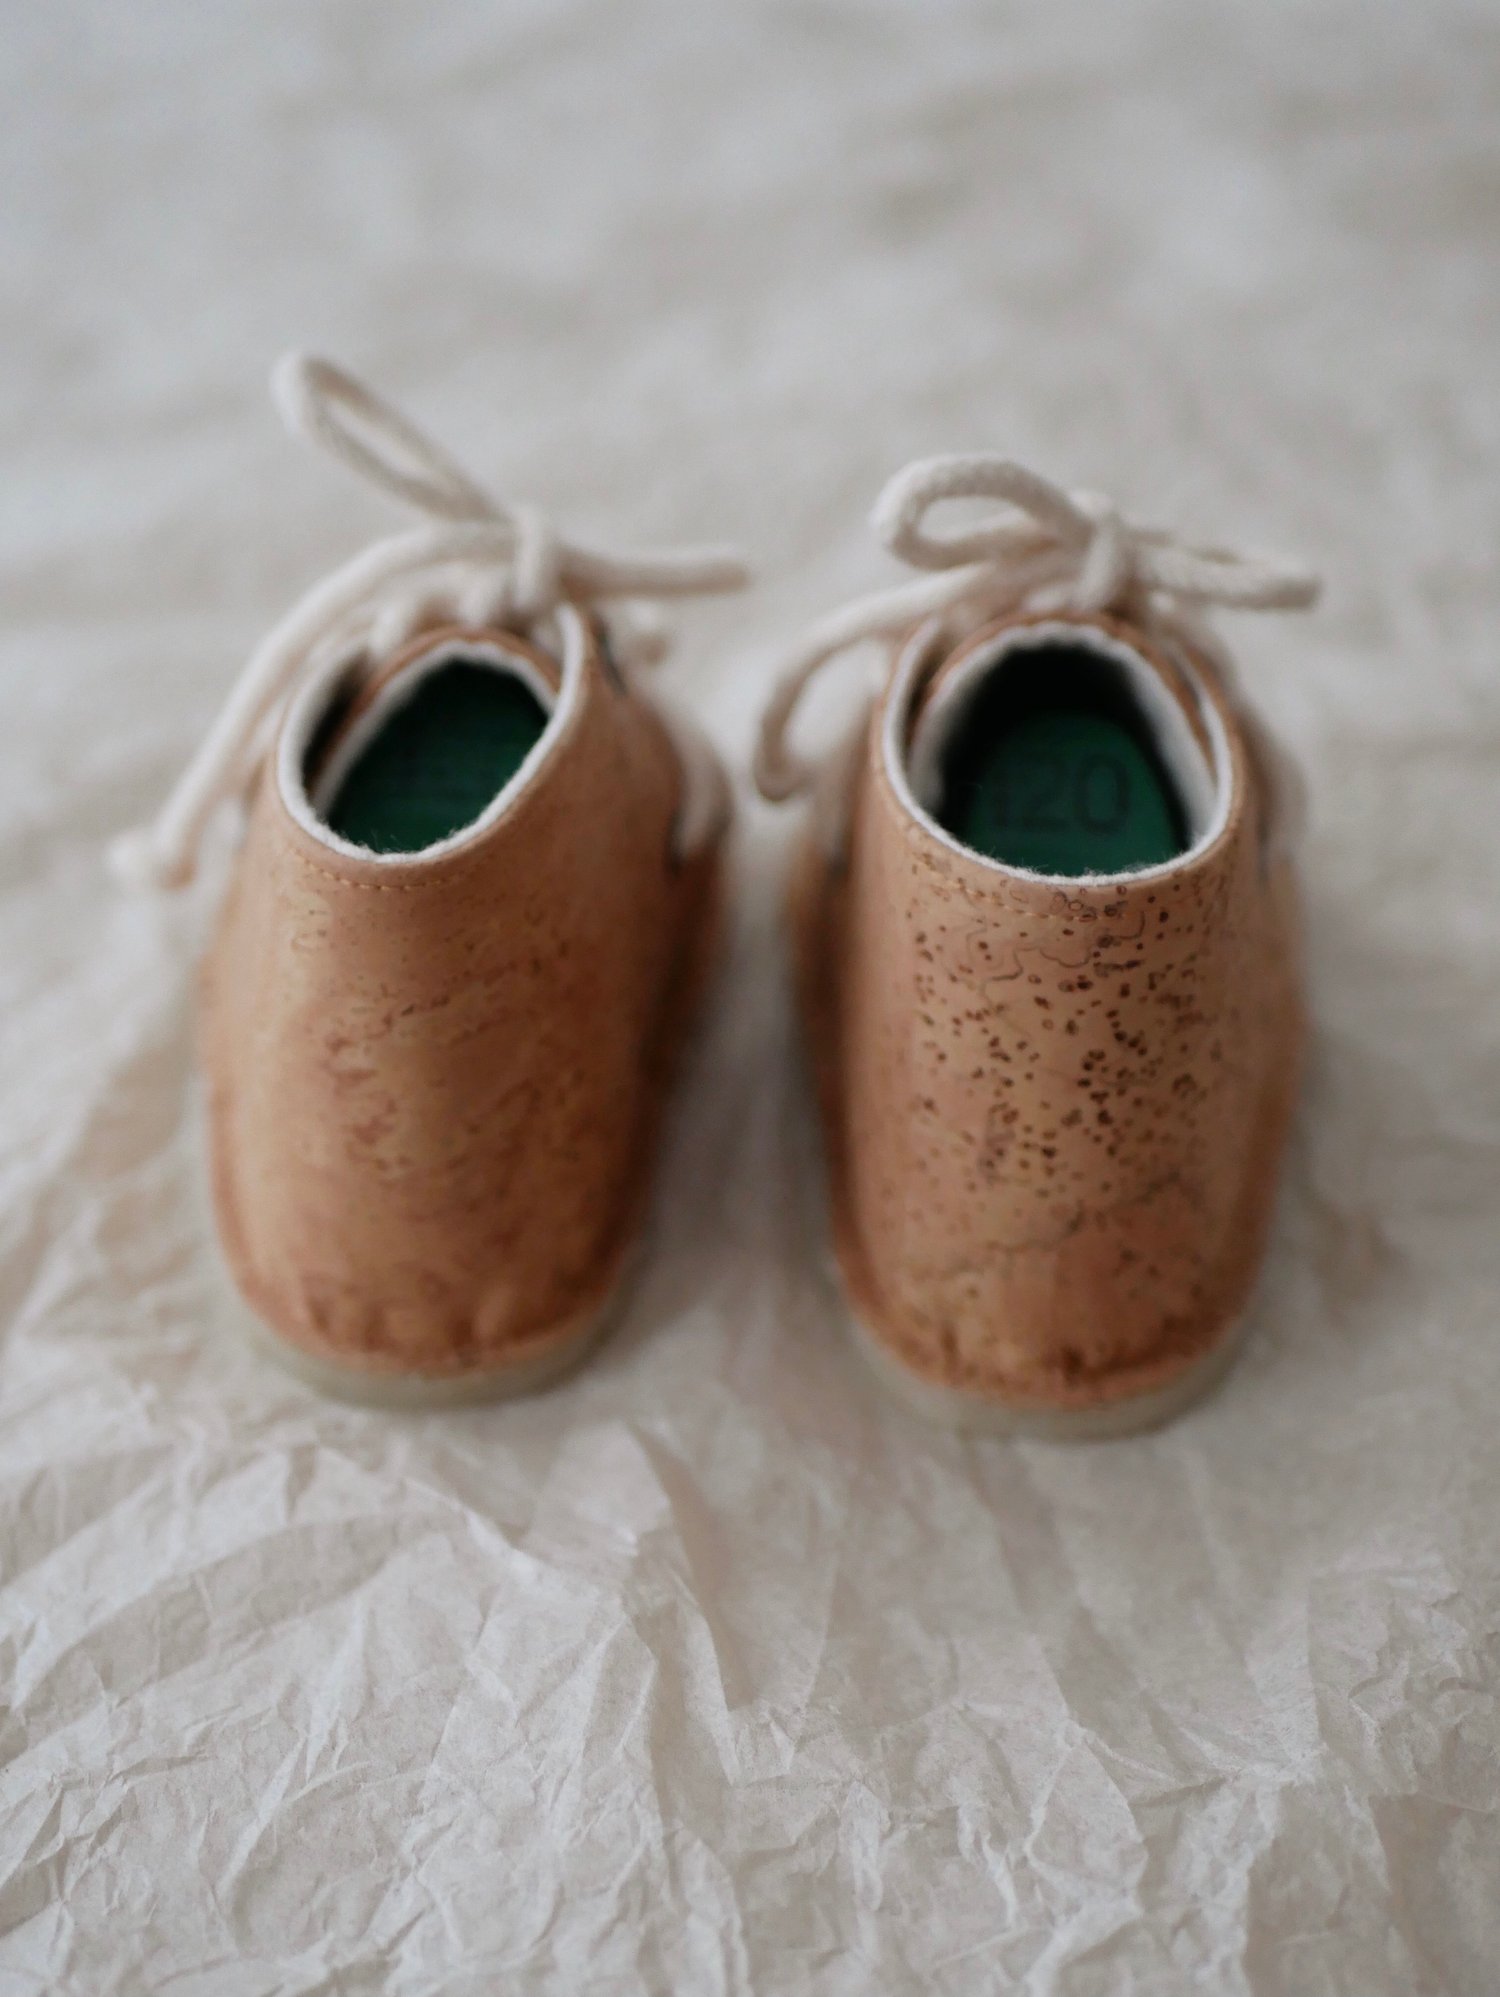 Image of Chaussures OAK naturel / Shoes OAK natural